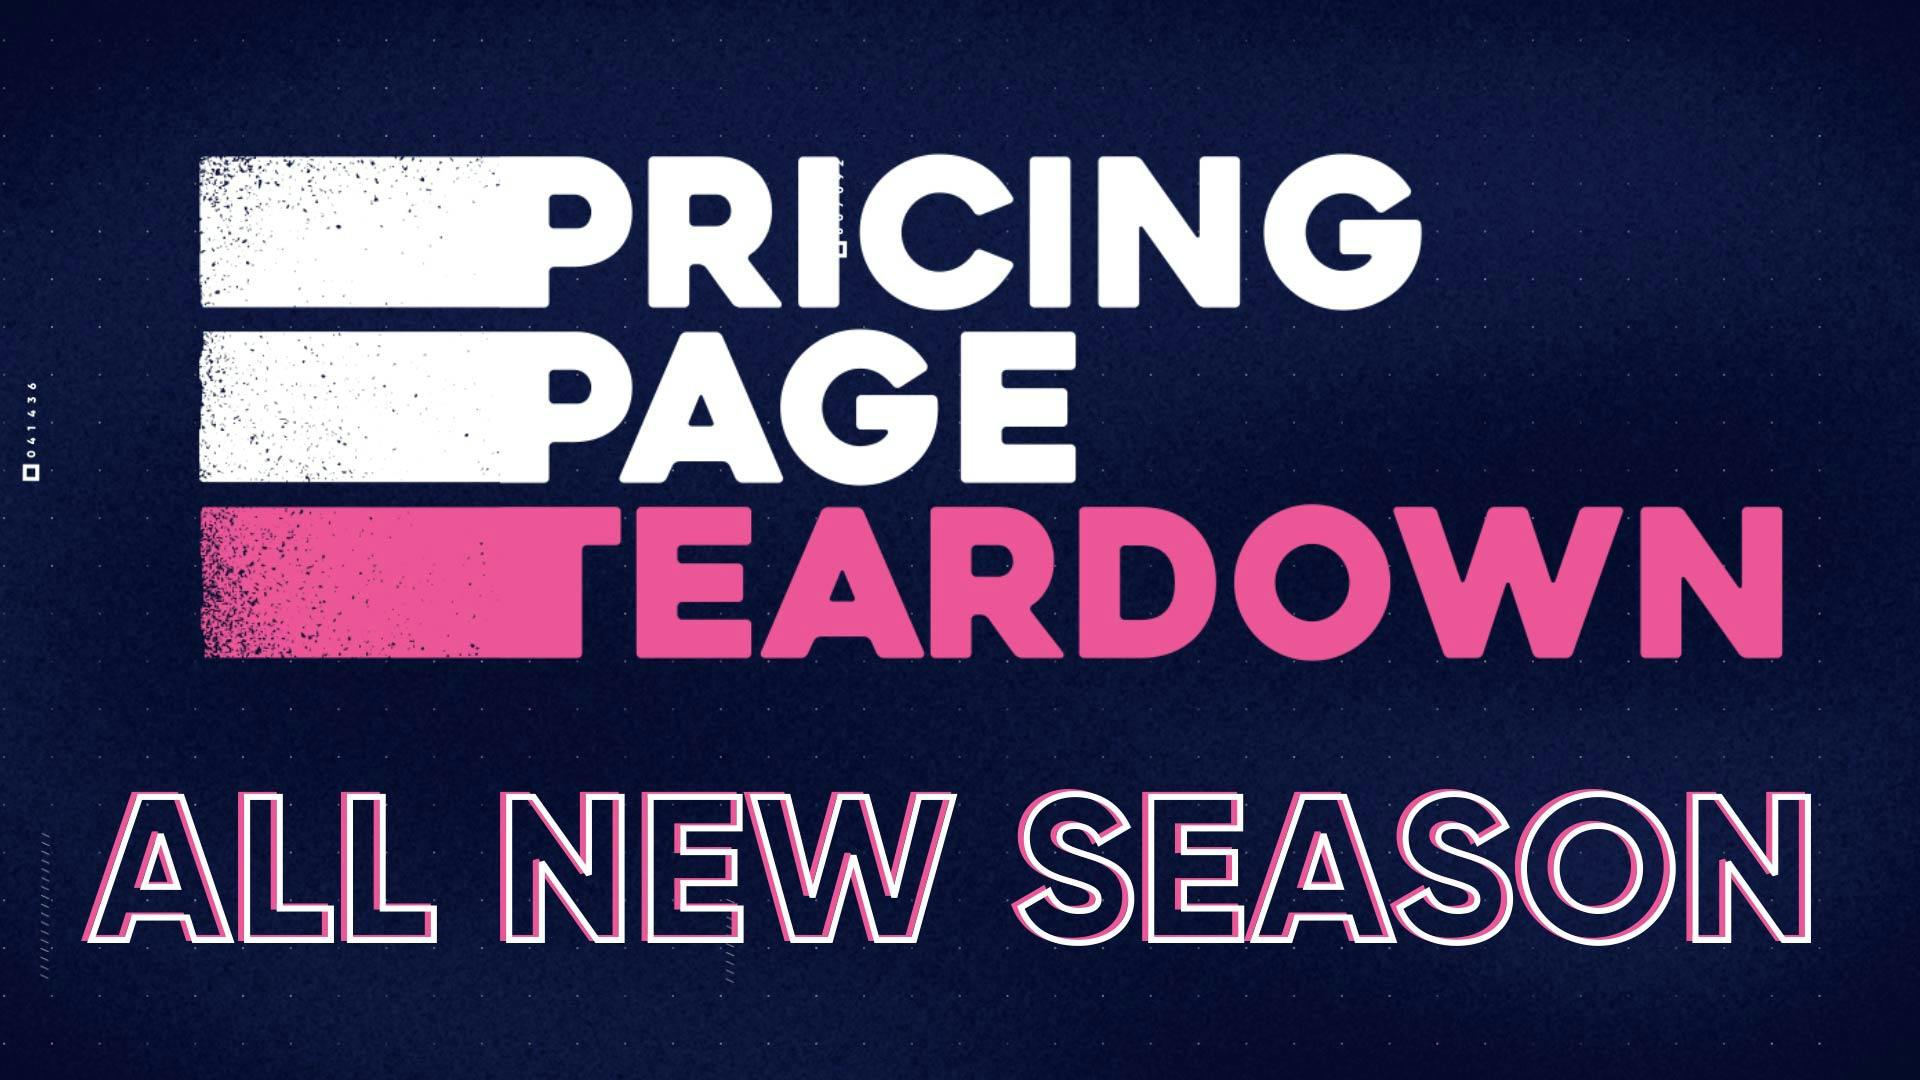 Pricing Page Teardown All New Season